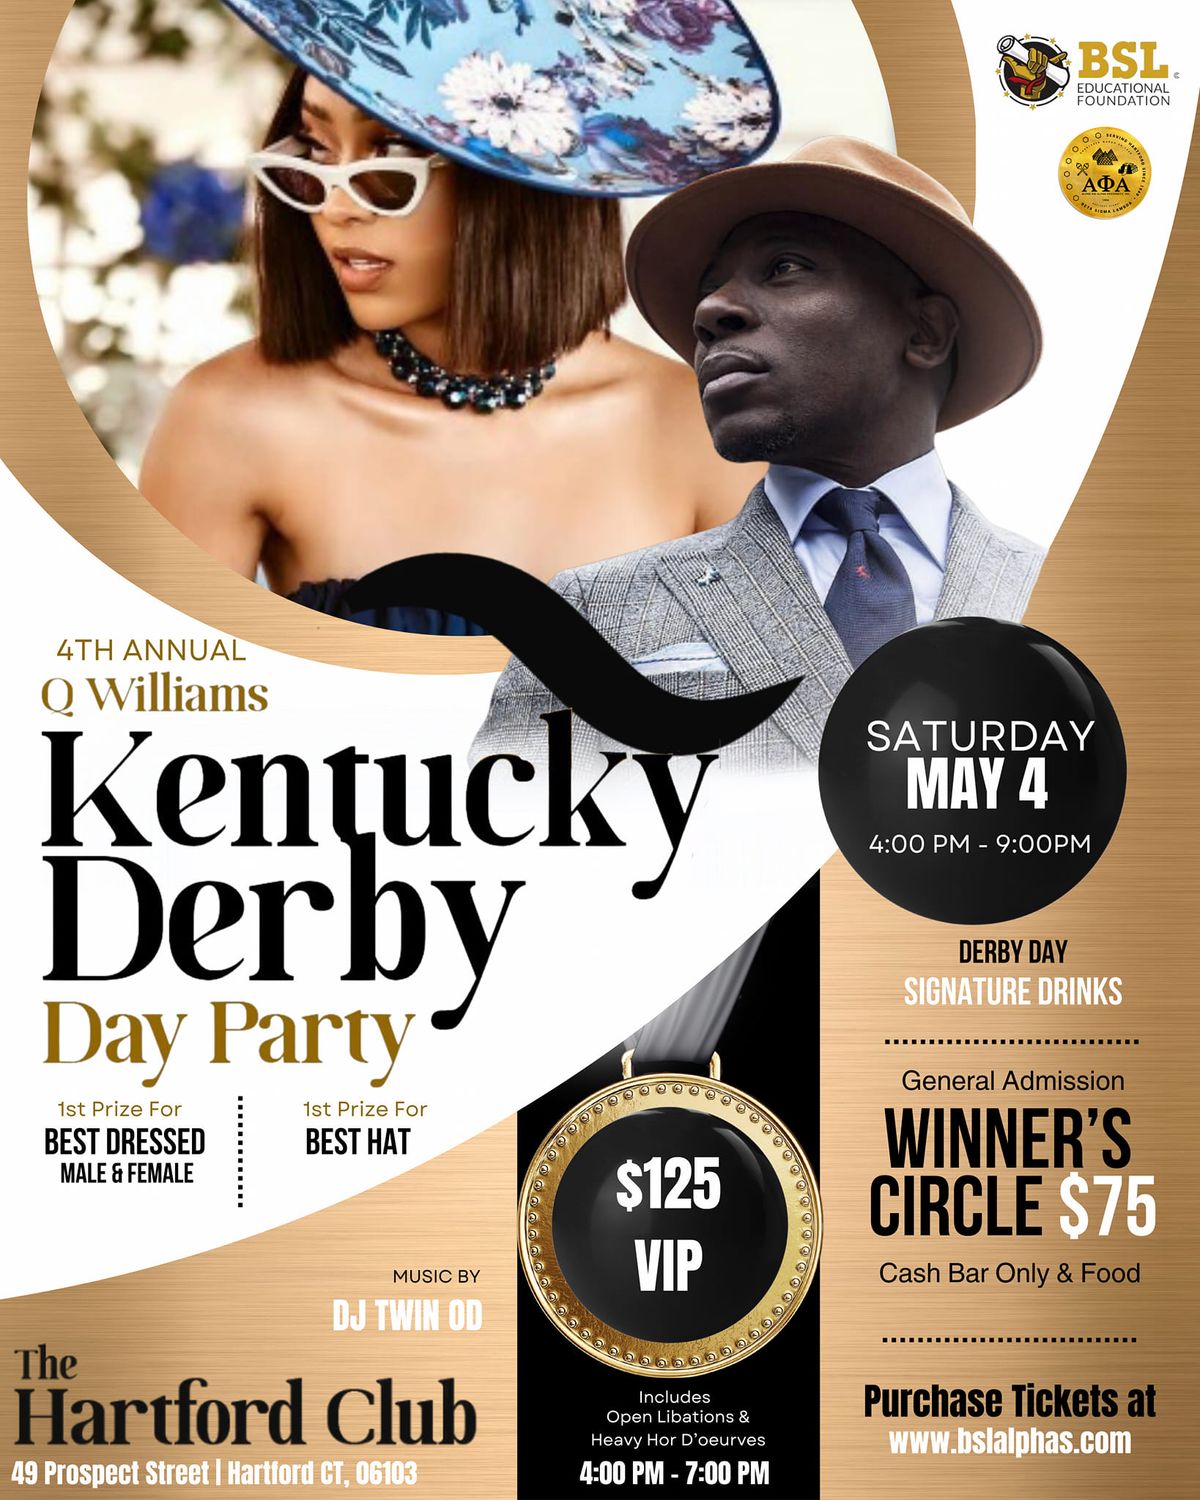 4th Annual Q Williams Kentucky Derby Day Fundraiser\n\n